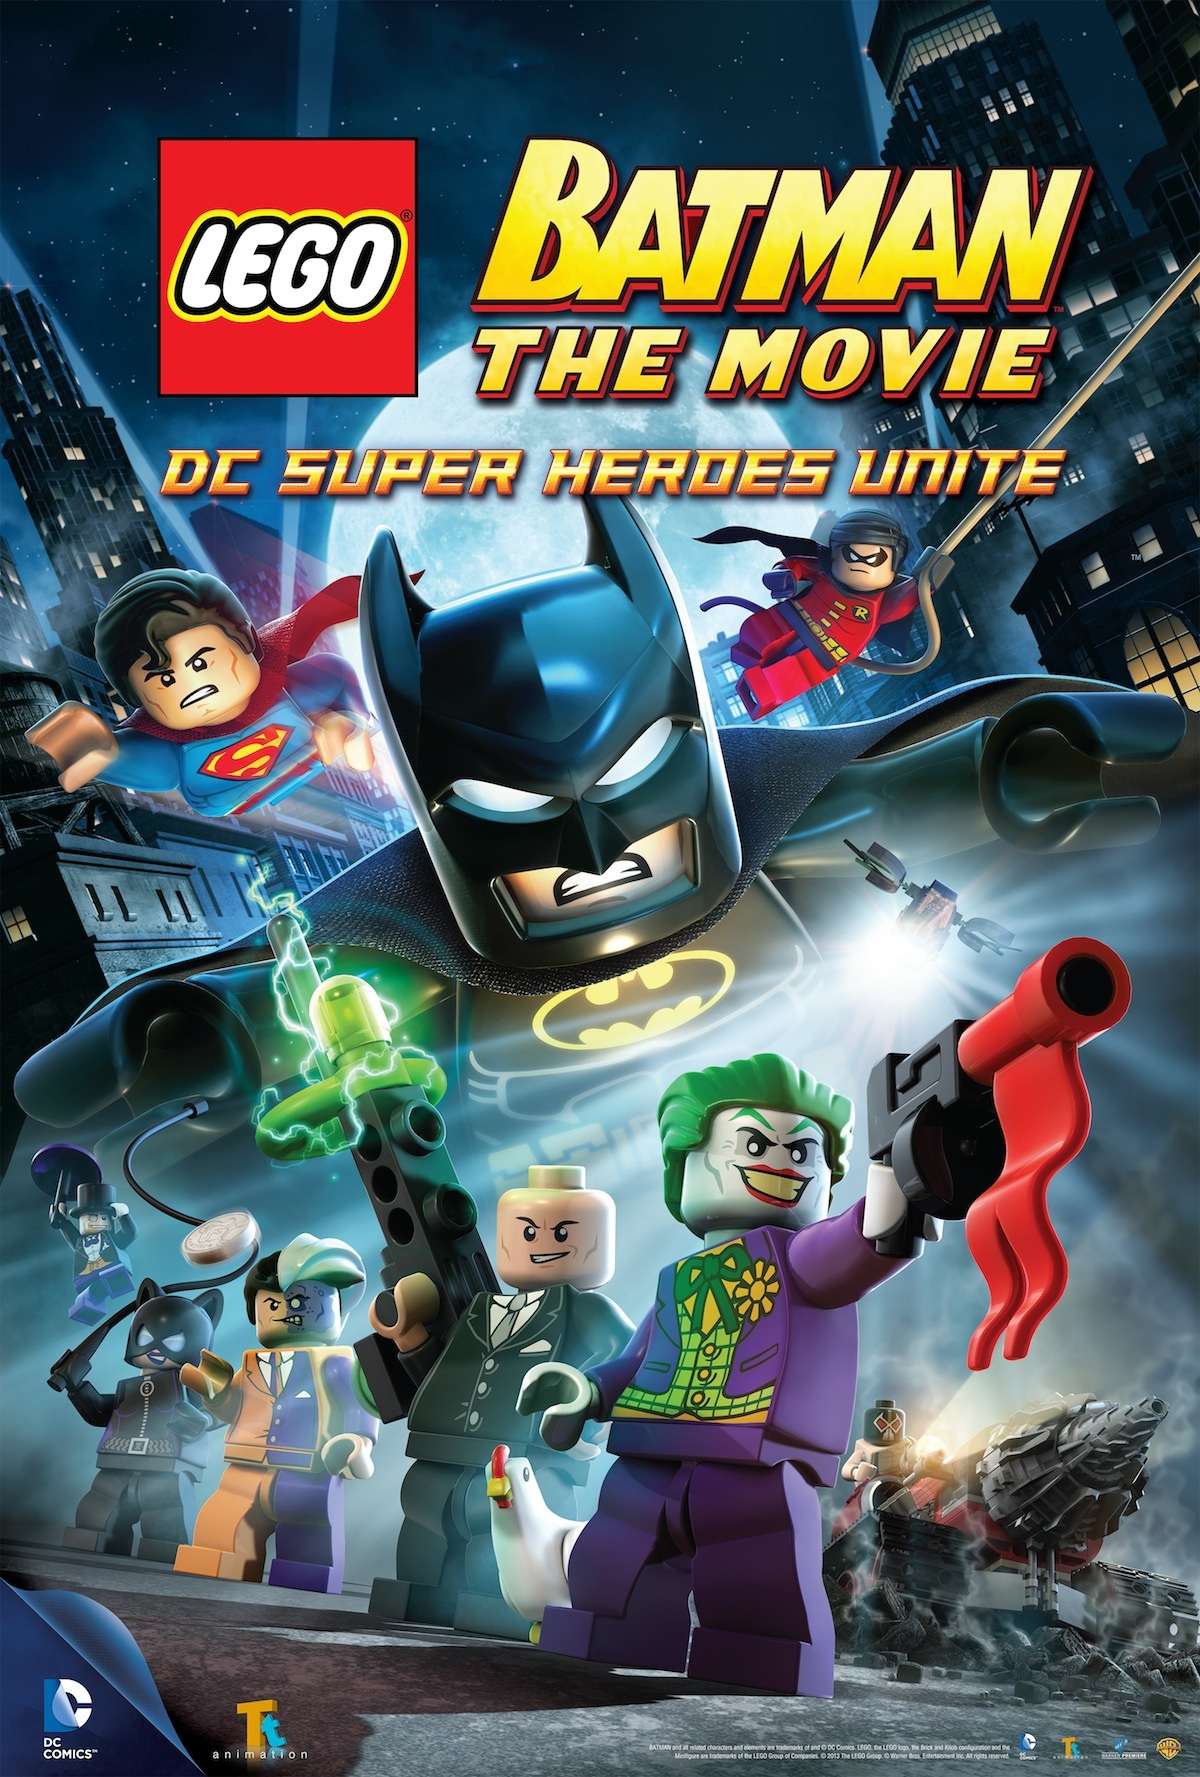 Lego Batman The Movie DC Superheroes Unite - 2013 DVDRip XviD - Türkçe Altyazılı Tek Link indir